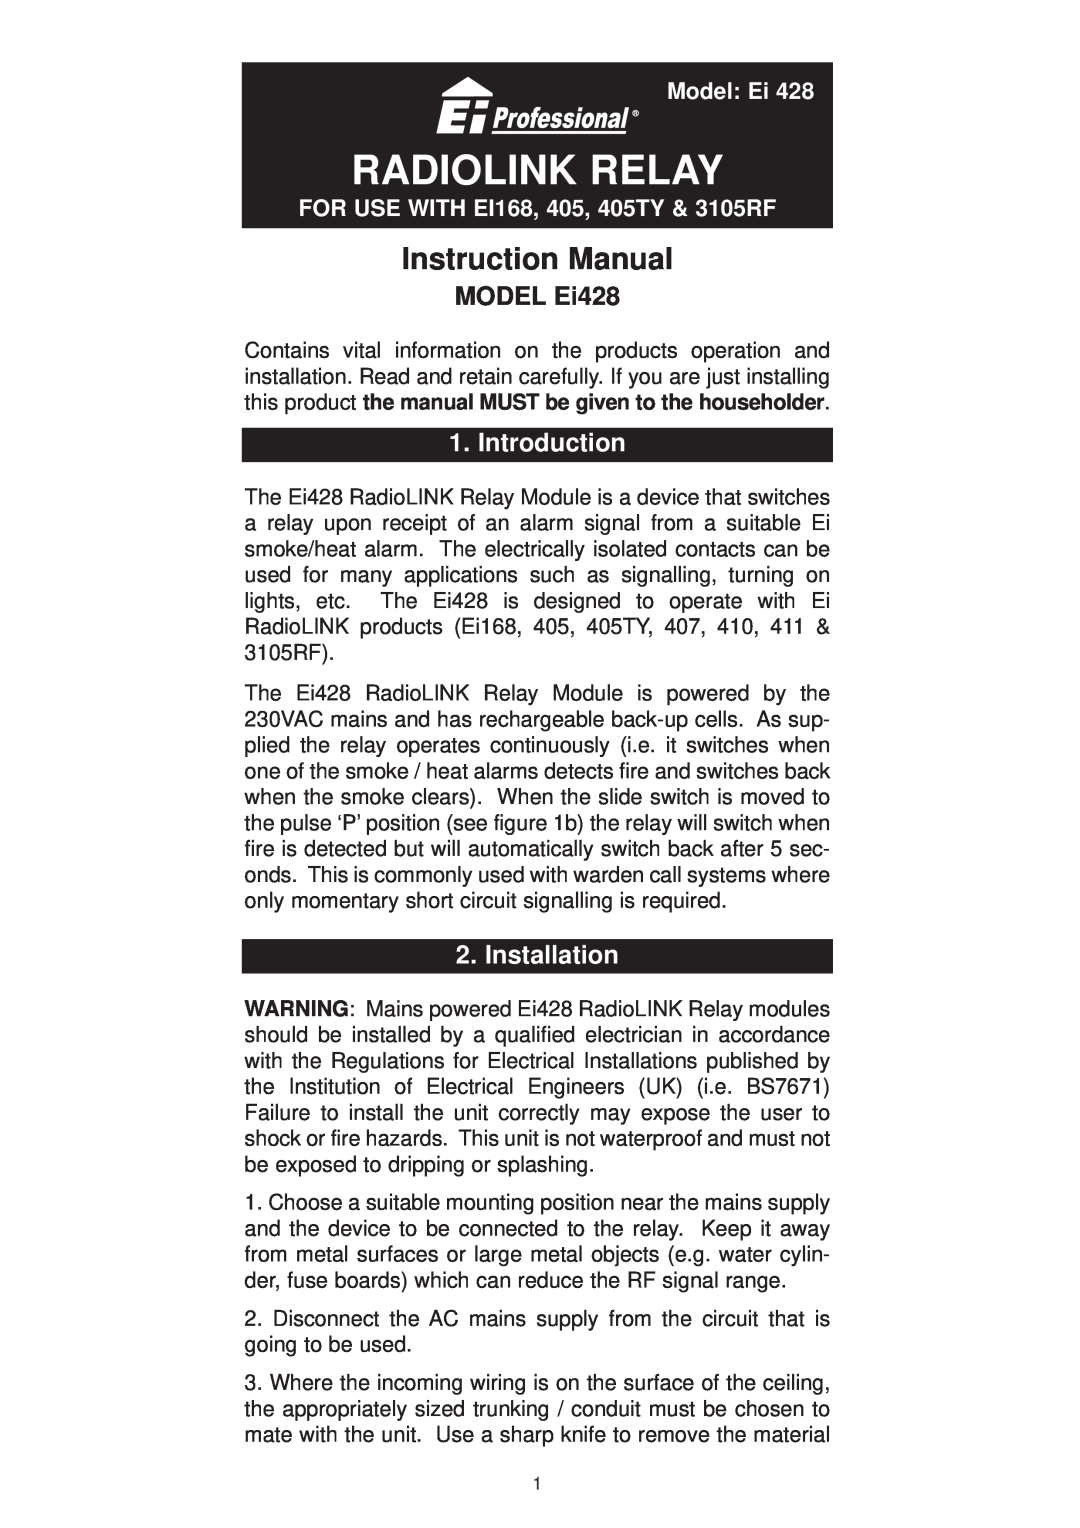 Ei Electronics instruction manual Introduction, Installation, Radiolink Relay, Instruction Manual, MODEL Ei428 